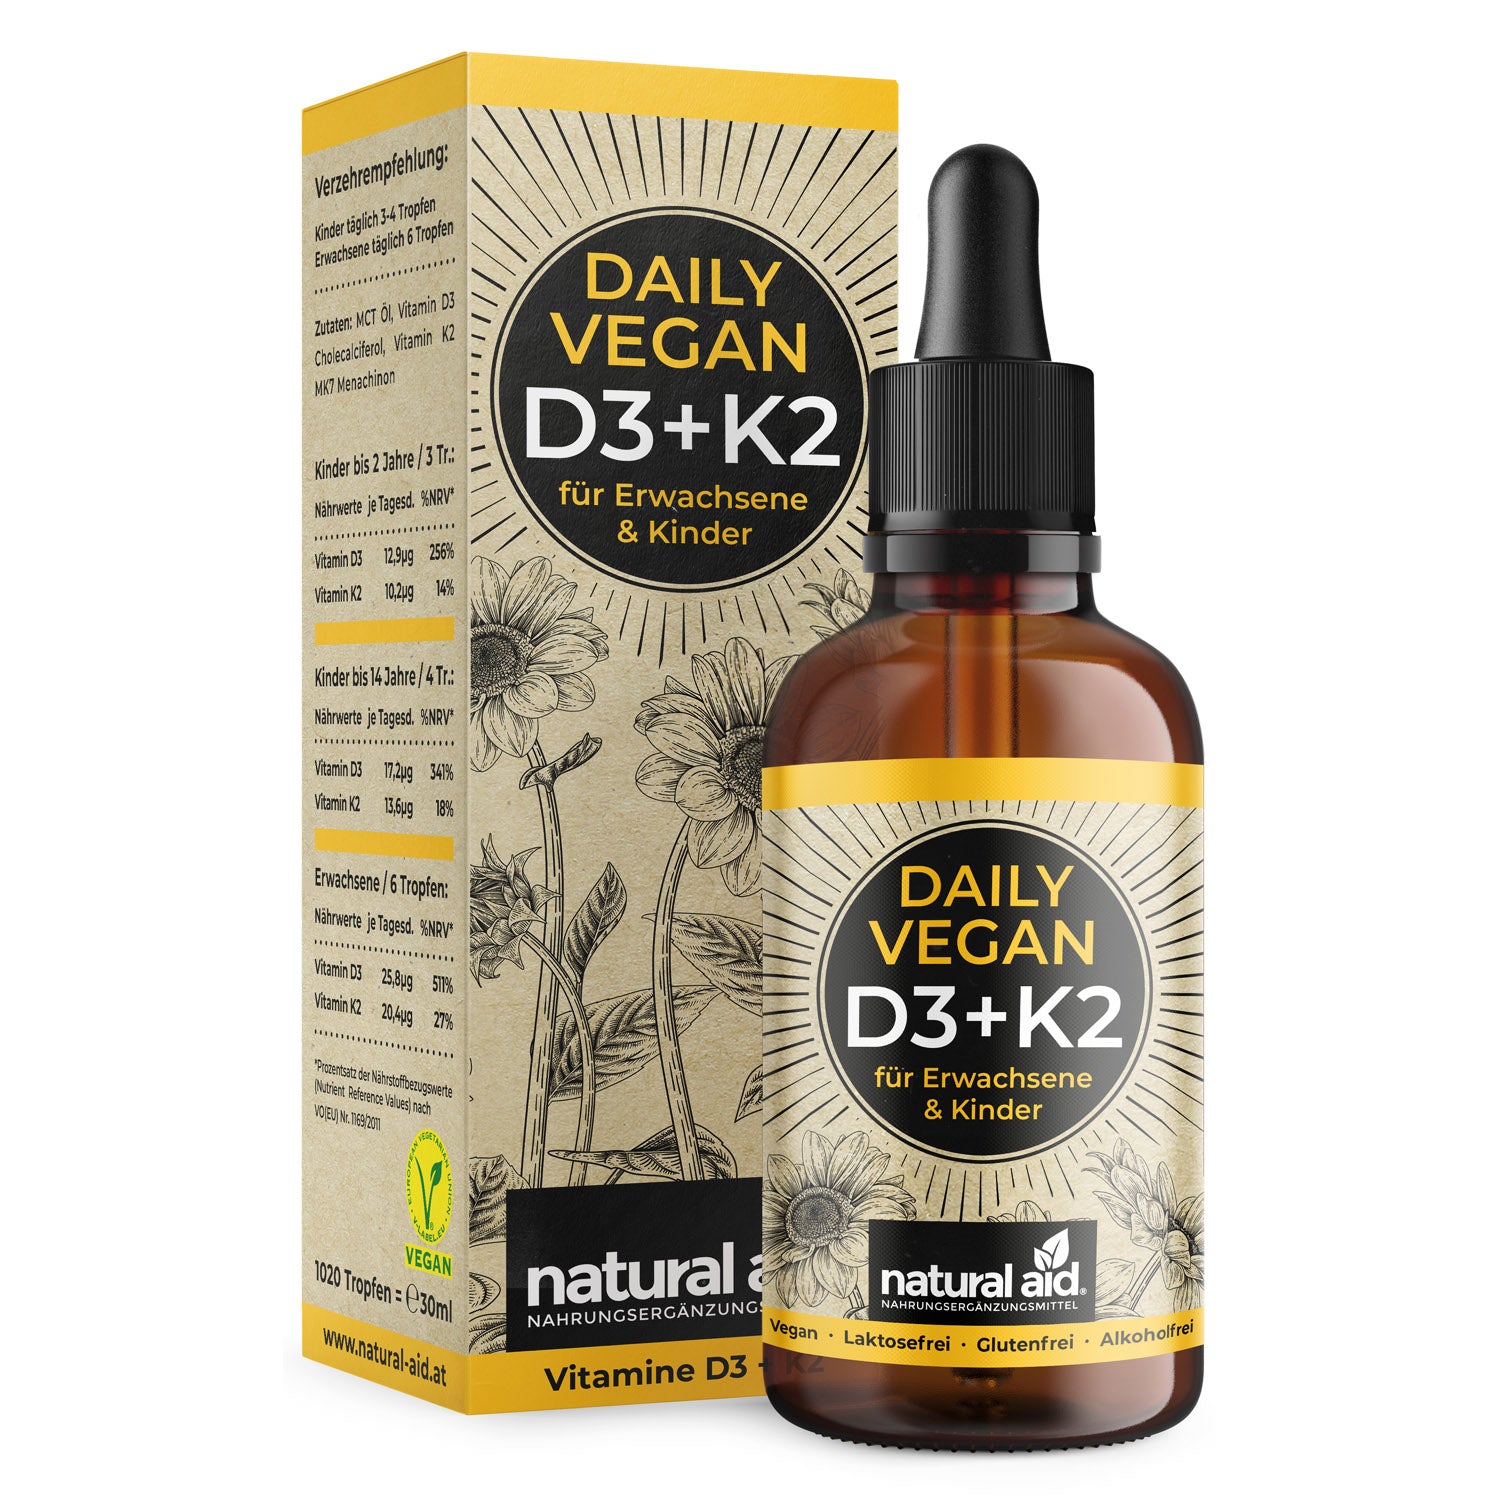 Daily Vegan D3+K2